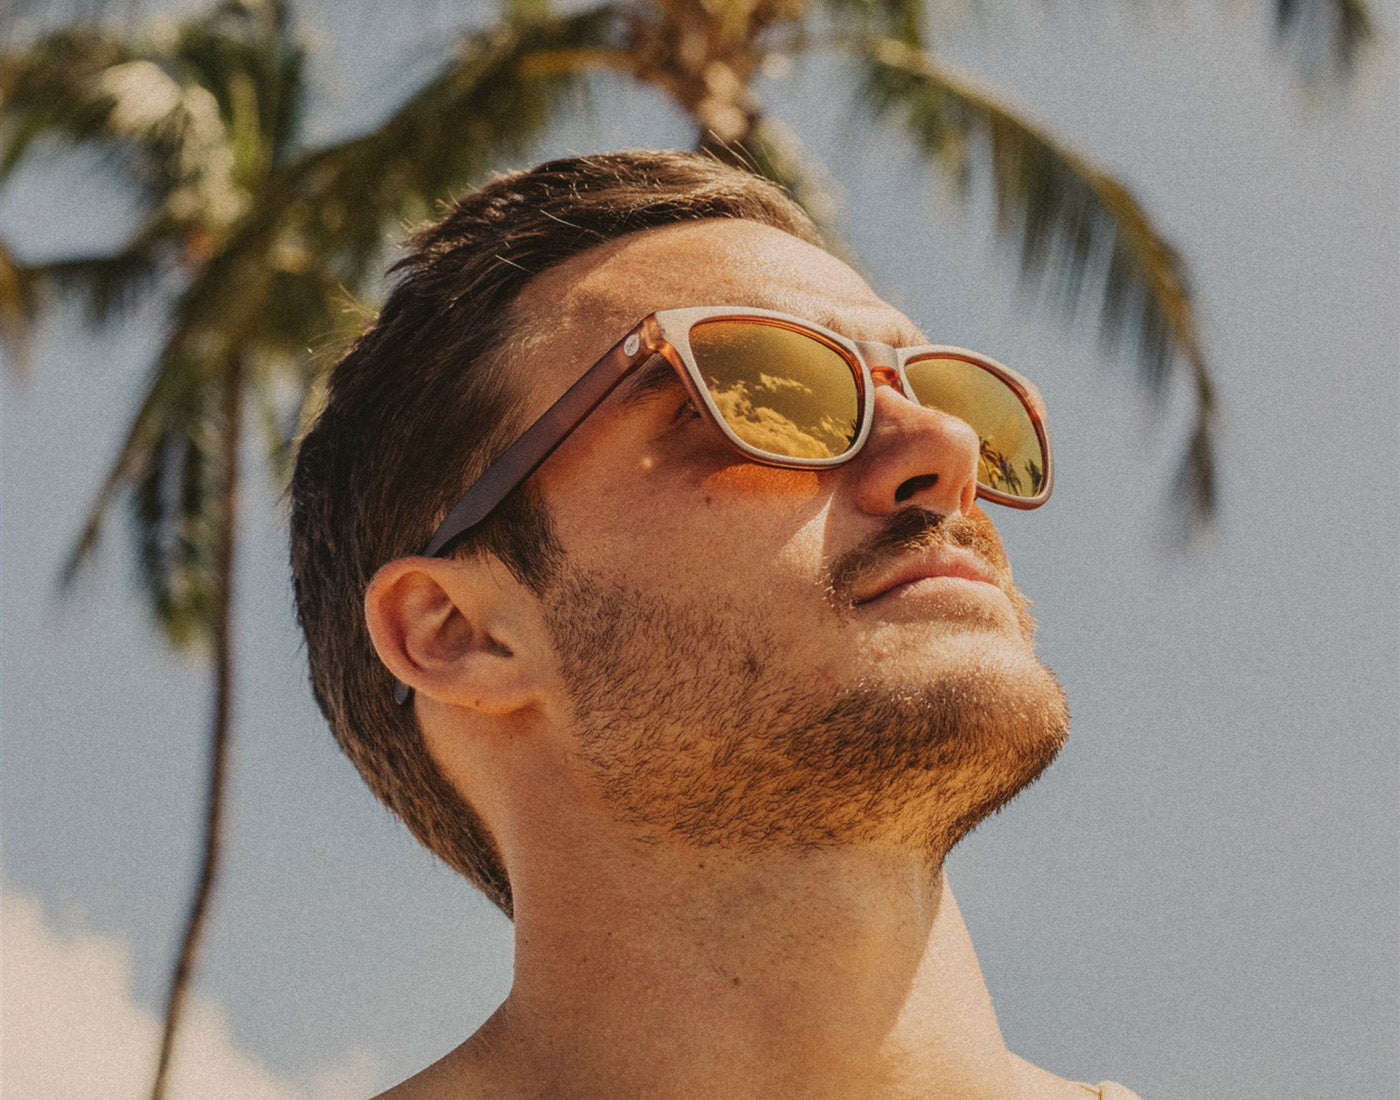 man looking up to sun wearing sunski headland sunglasses